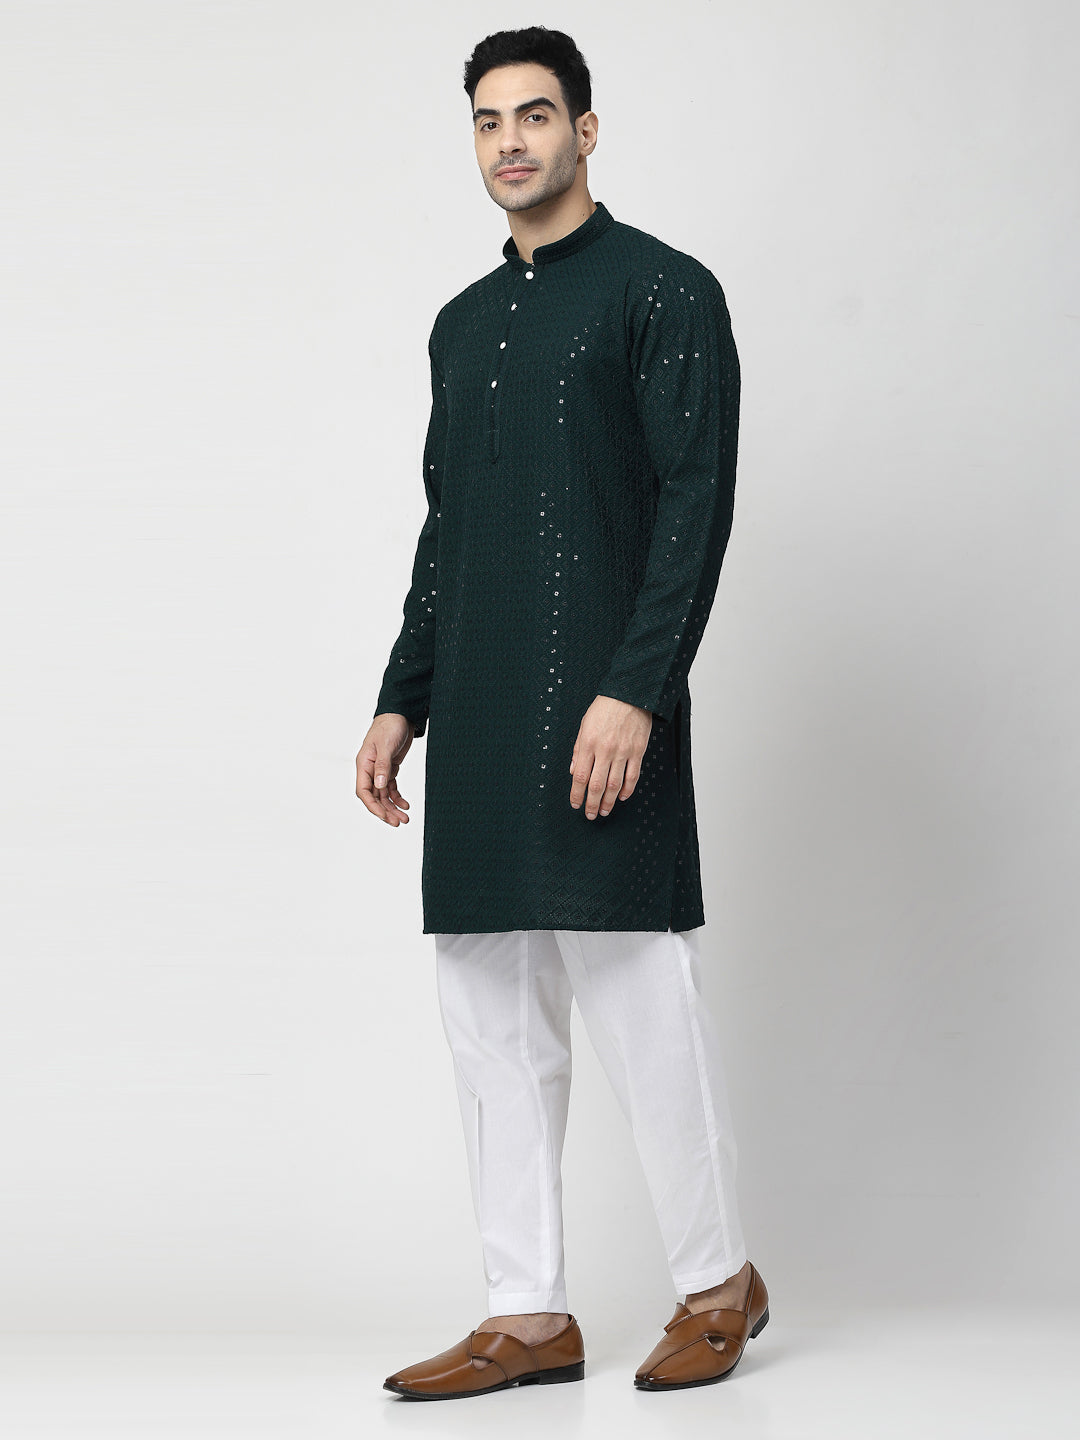 Men's Embroidery Cotton Blend Chikankari Kurta Set with White Pyjama (Green Color)